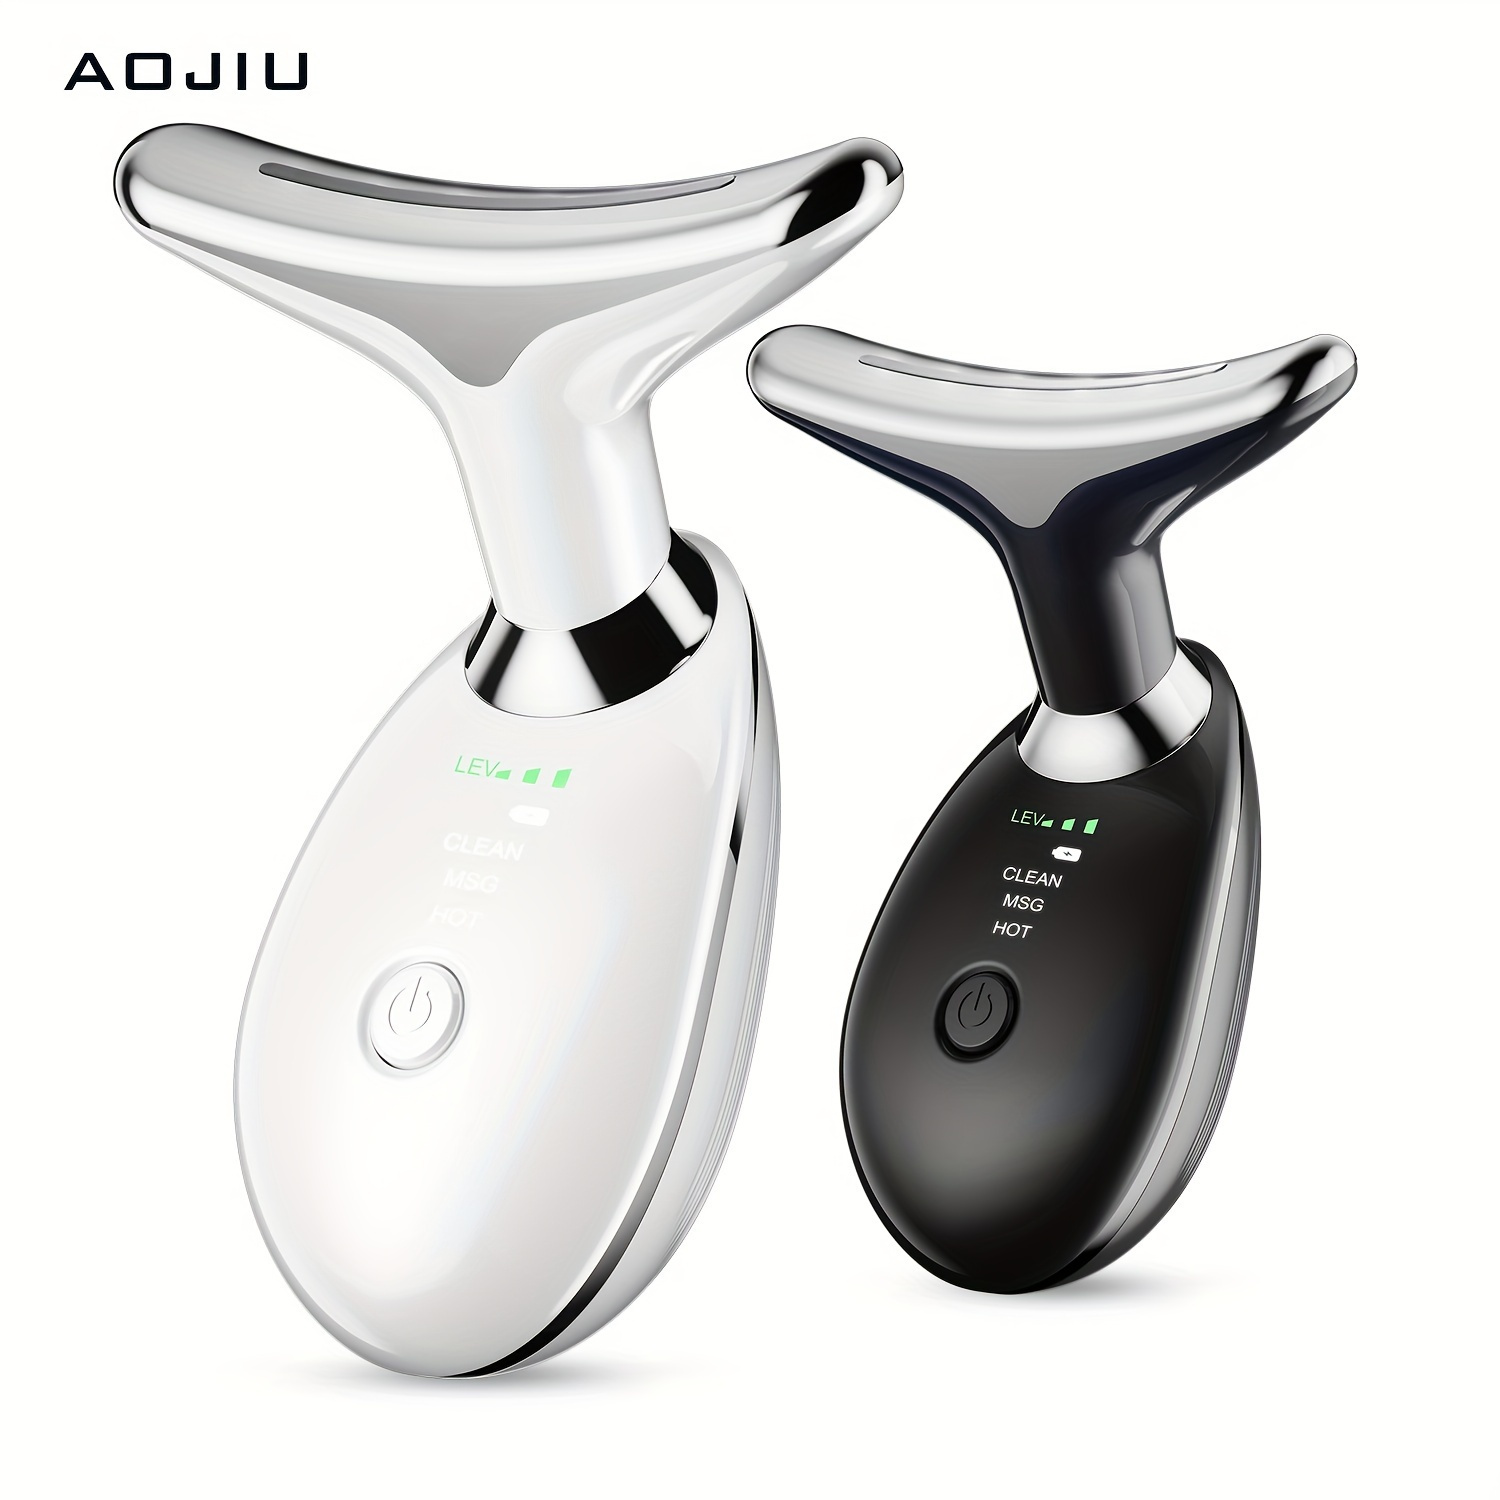 

Aojiu Portable Beauty Instrument, Neck Facial Massager, Relaxes Skin, 3-mode Home Spa Massager, Girl Gift For Skin Care, Beauty Massager